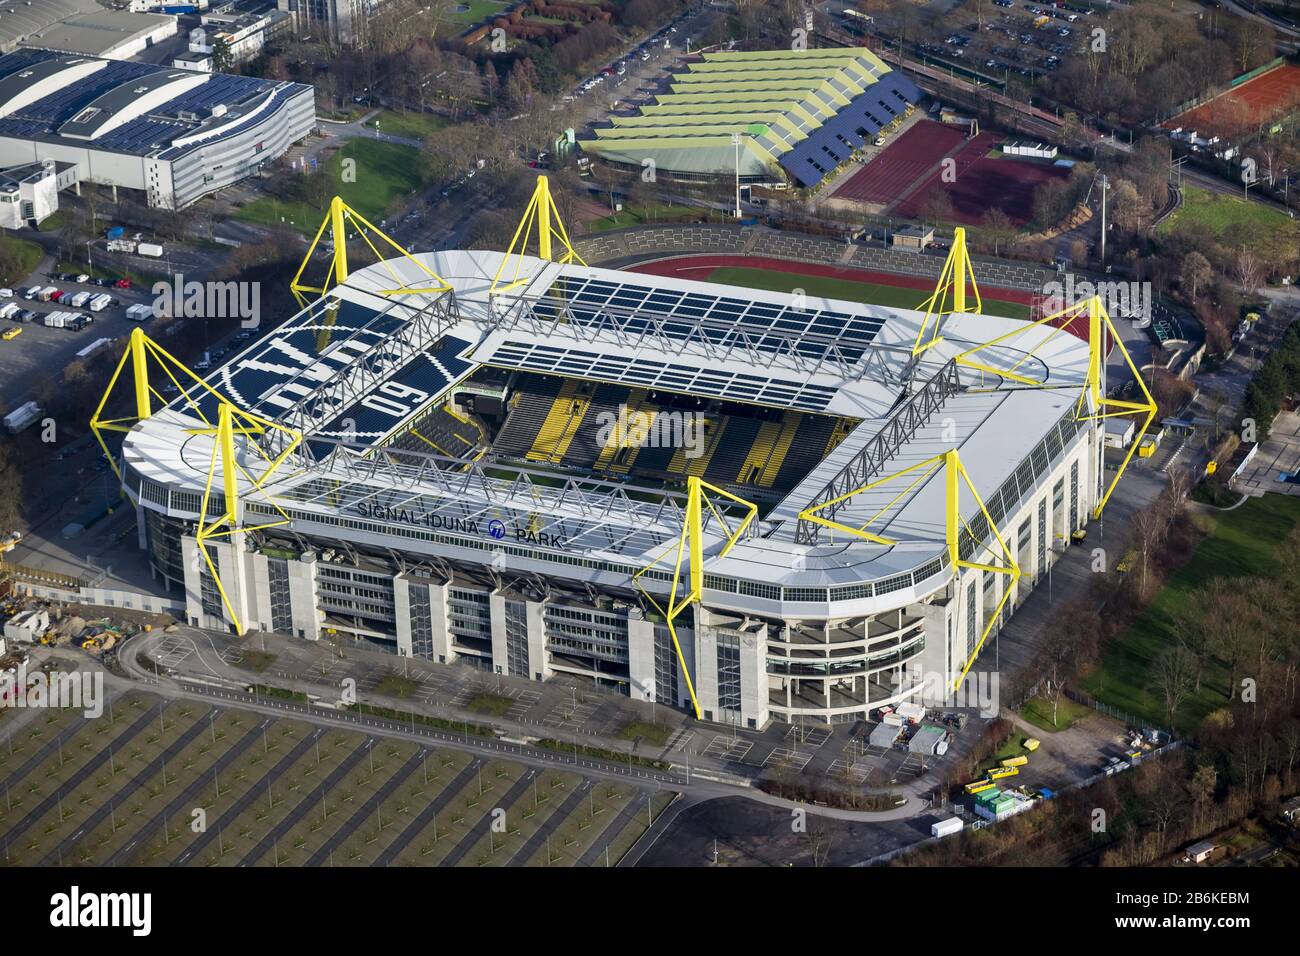 stadium Westfalenstadion of Dortmund BVB, 19.01.2014, aerial view, Germany, North Rhine-Westphalia, Ruhr Area, Dortmund Stock Photo